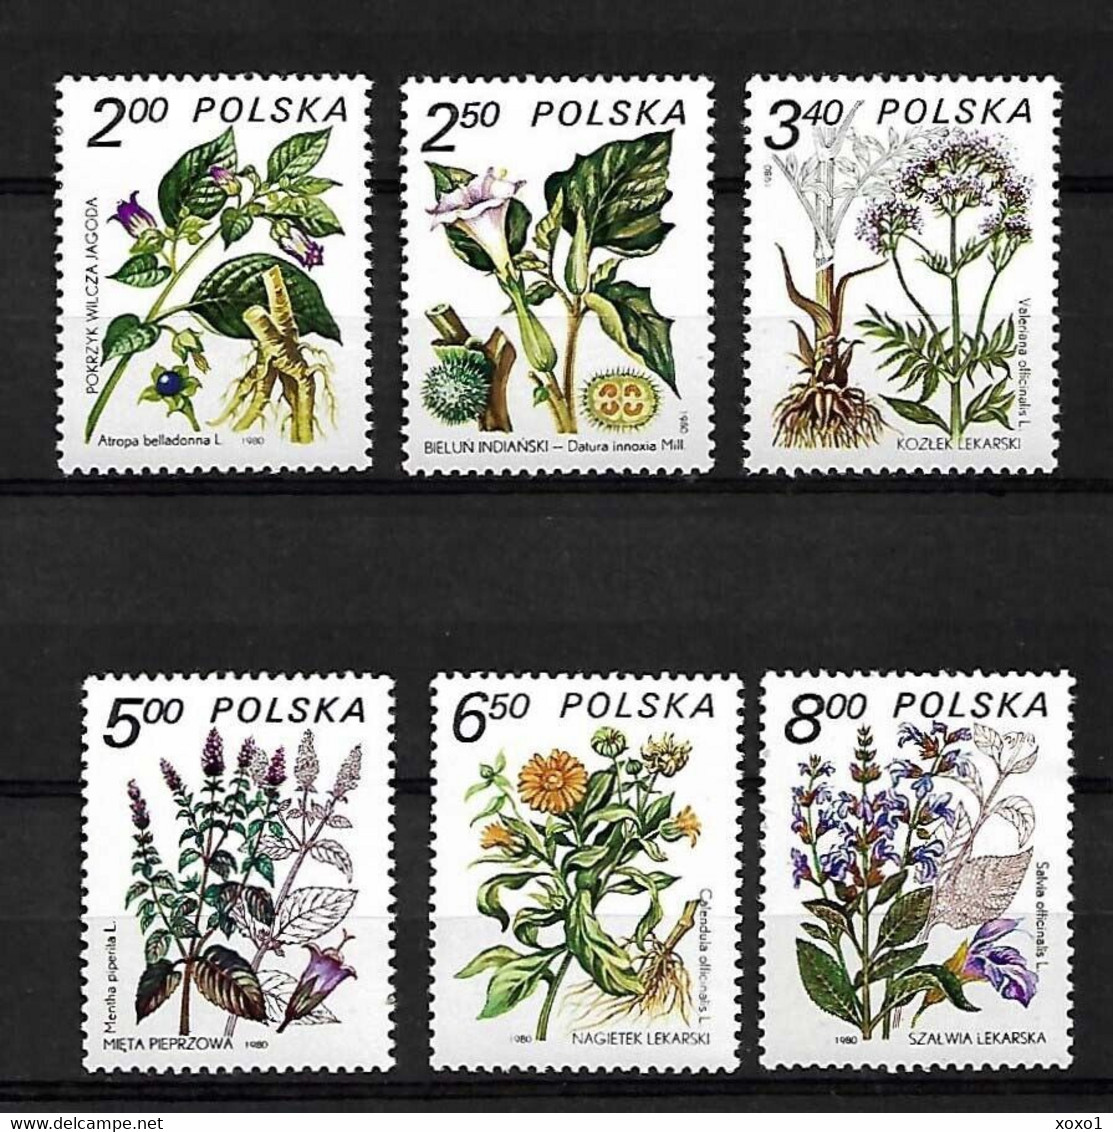 Poland 1980 MiNr. 2706 - 2711 Polen Medicinal Plants 6v MNH**  3.00 € - Geneeskrachtige Planten